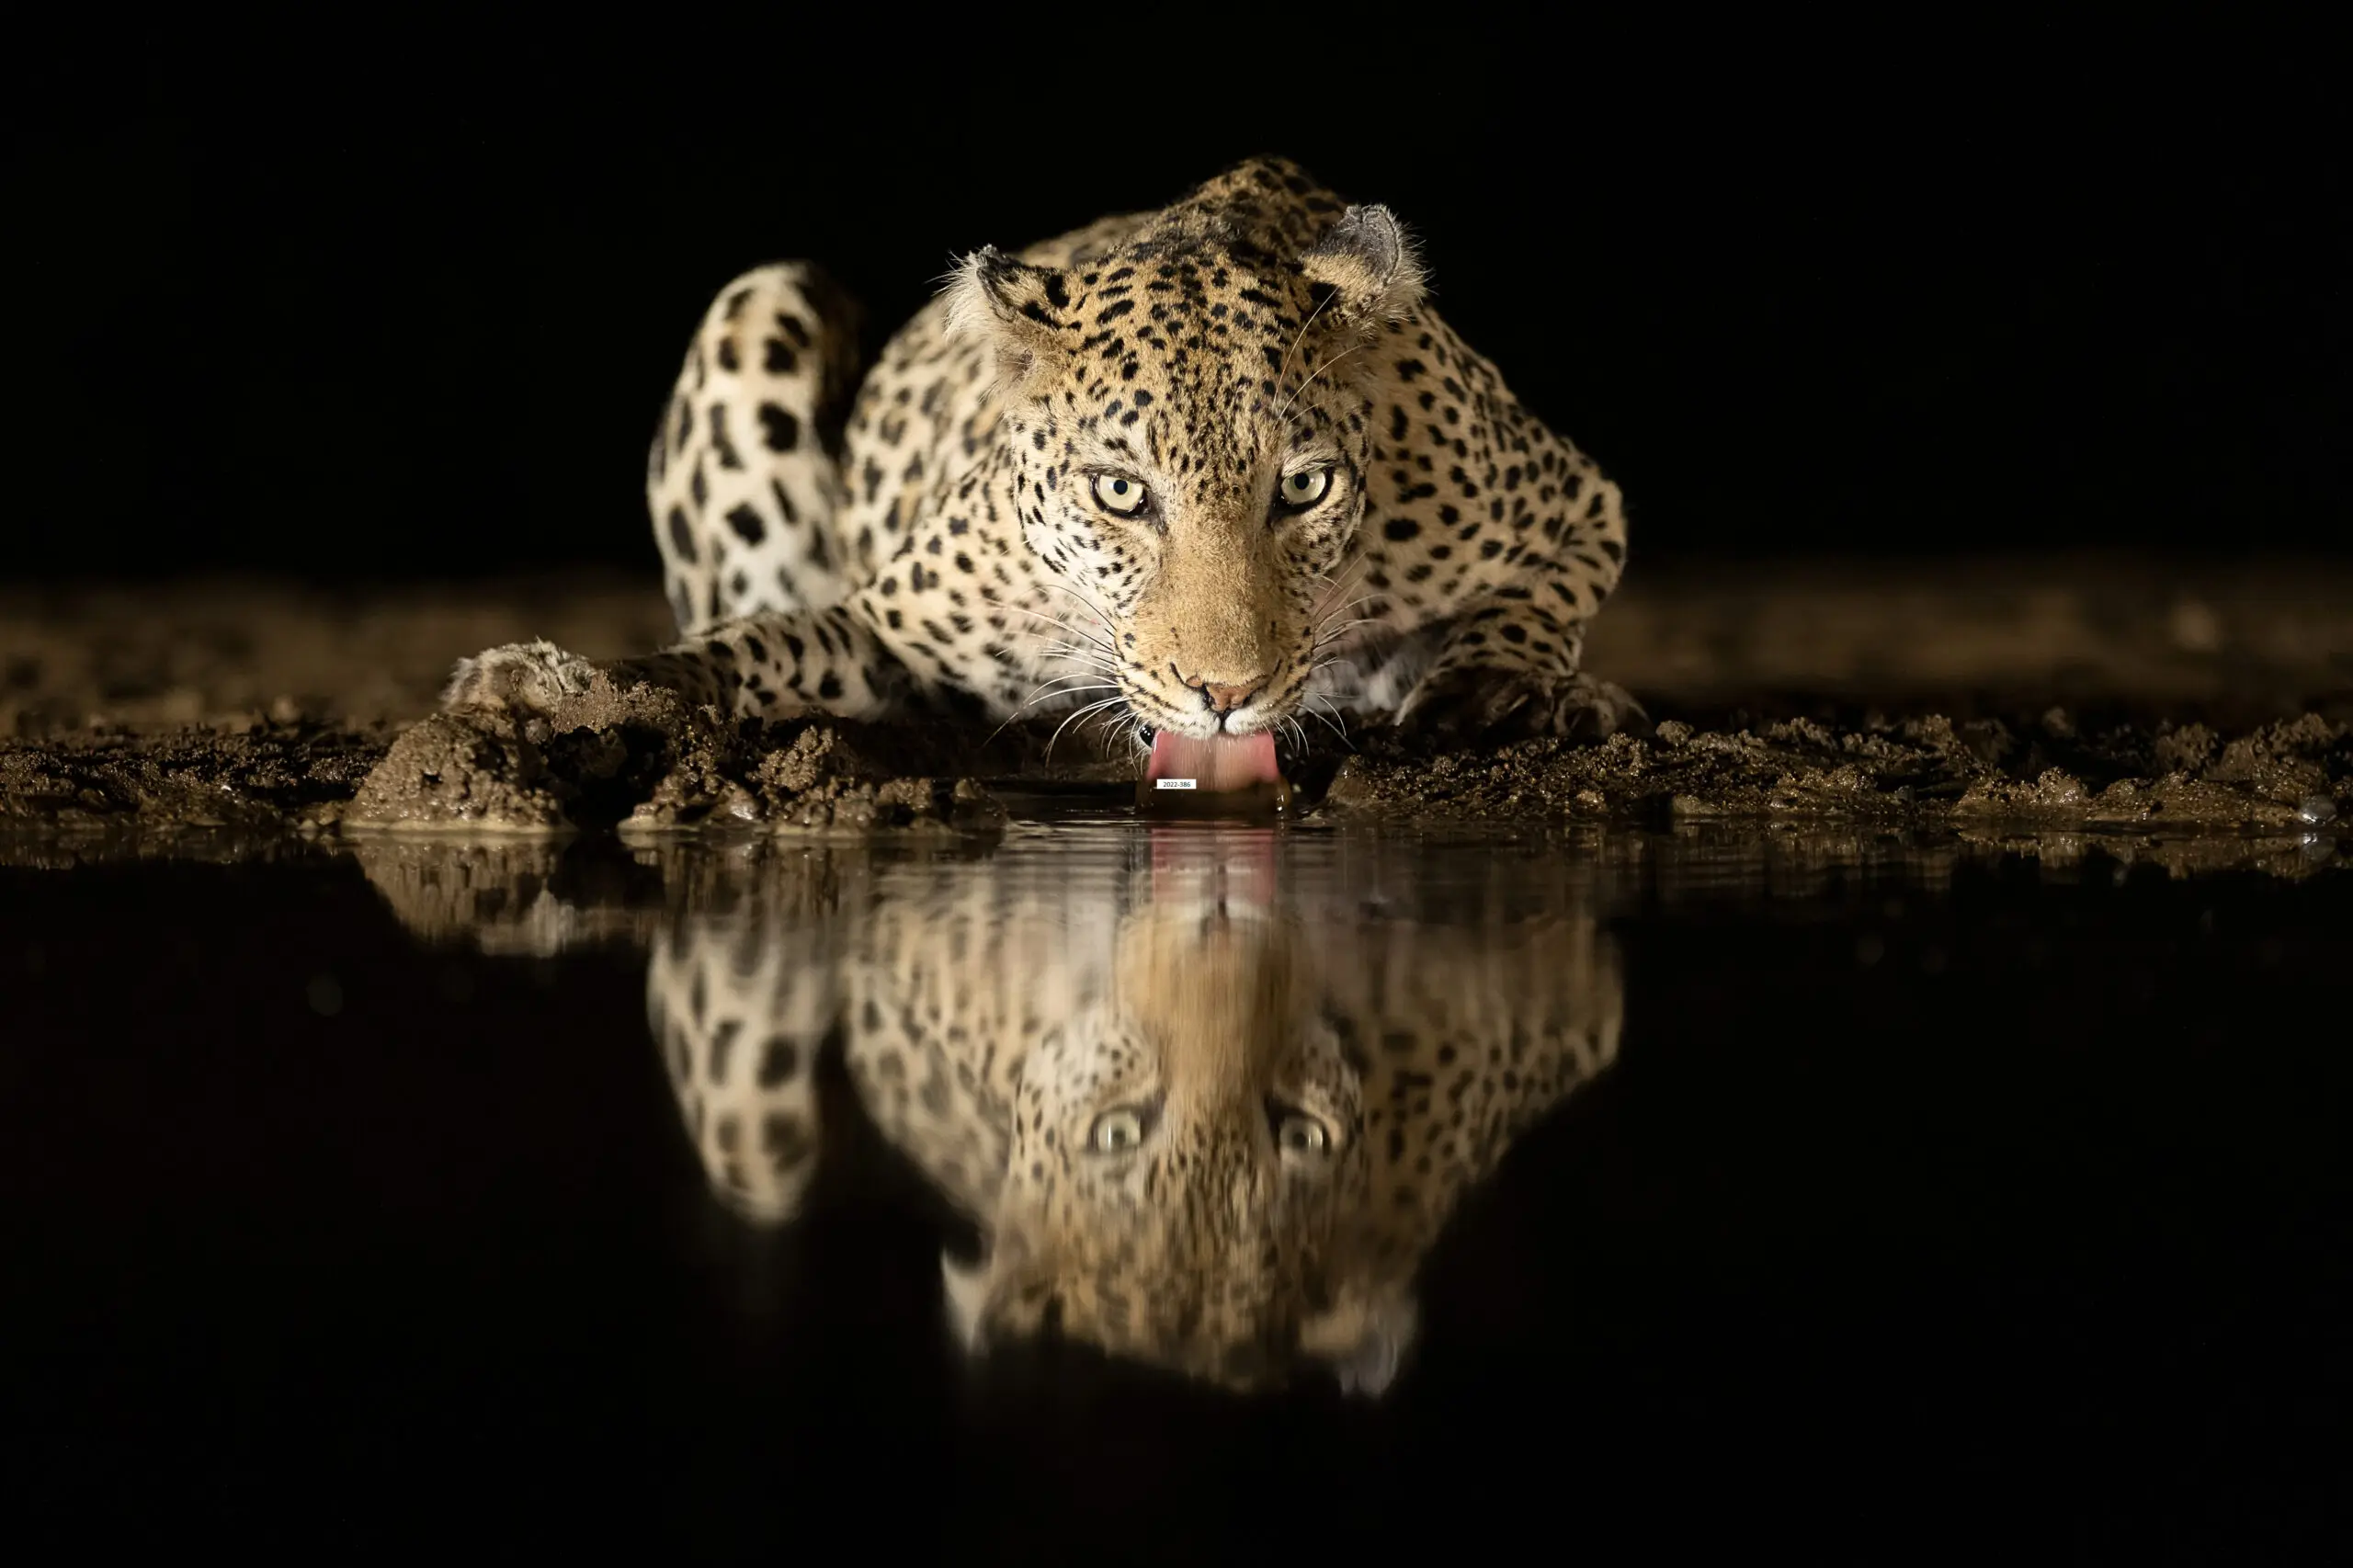 Wandbild (19400) Leopard drinking by Joan Gil Raga präsentiert: Wasser,Tiere